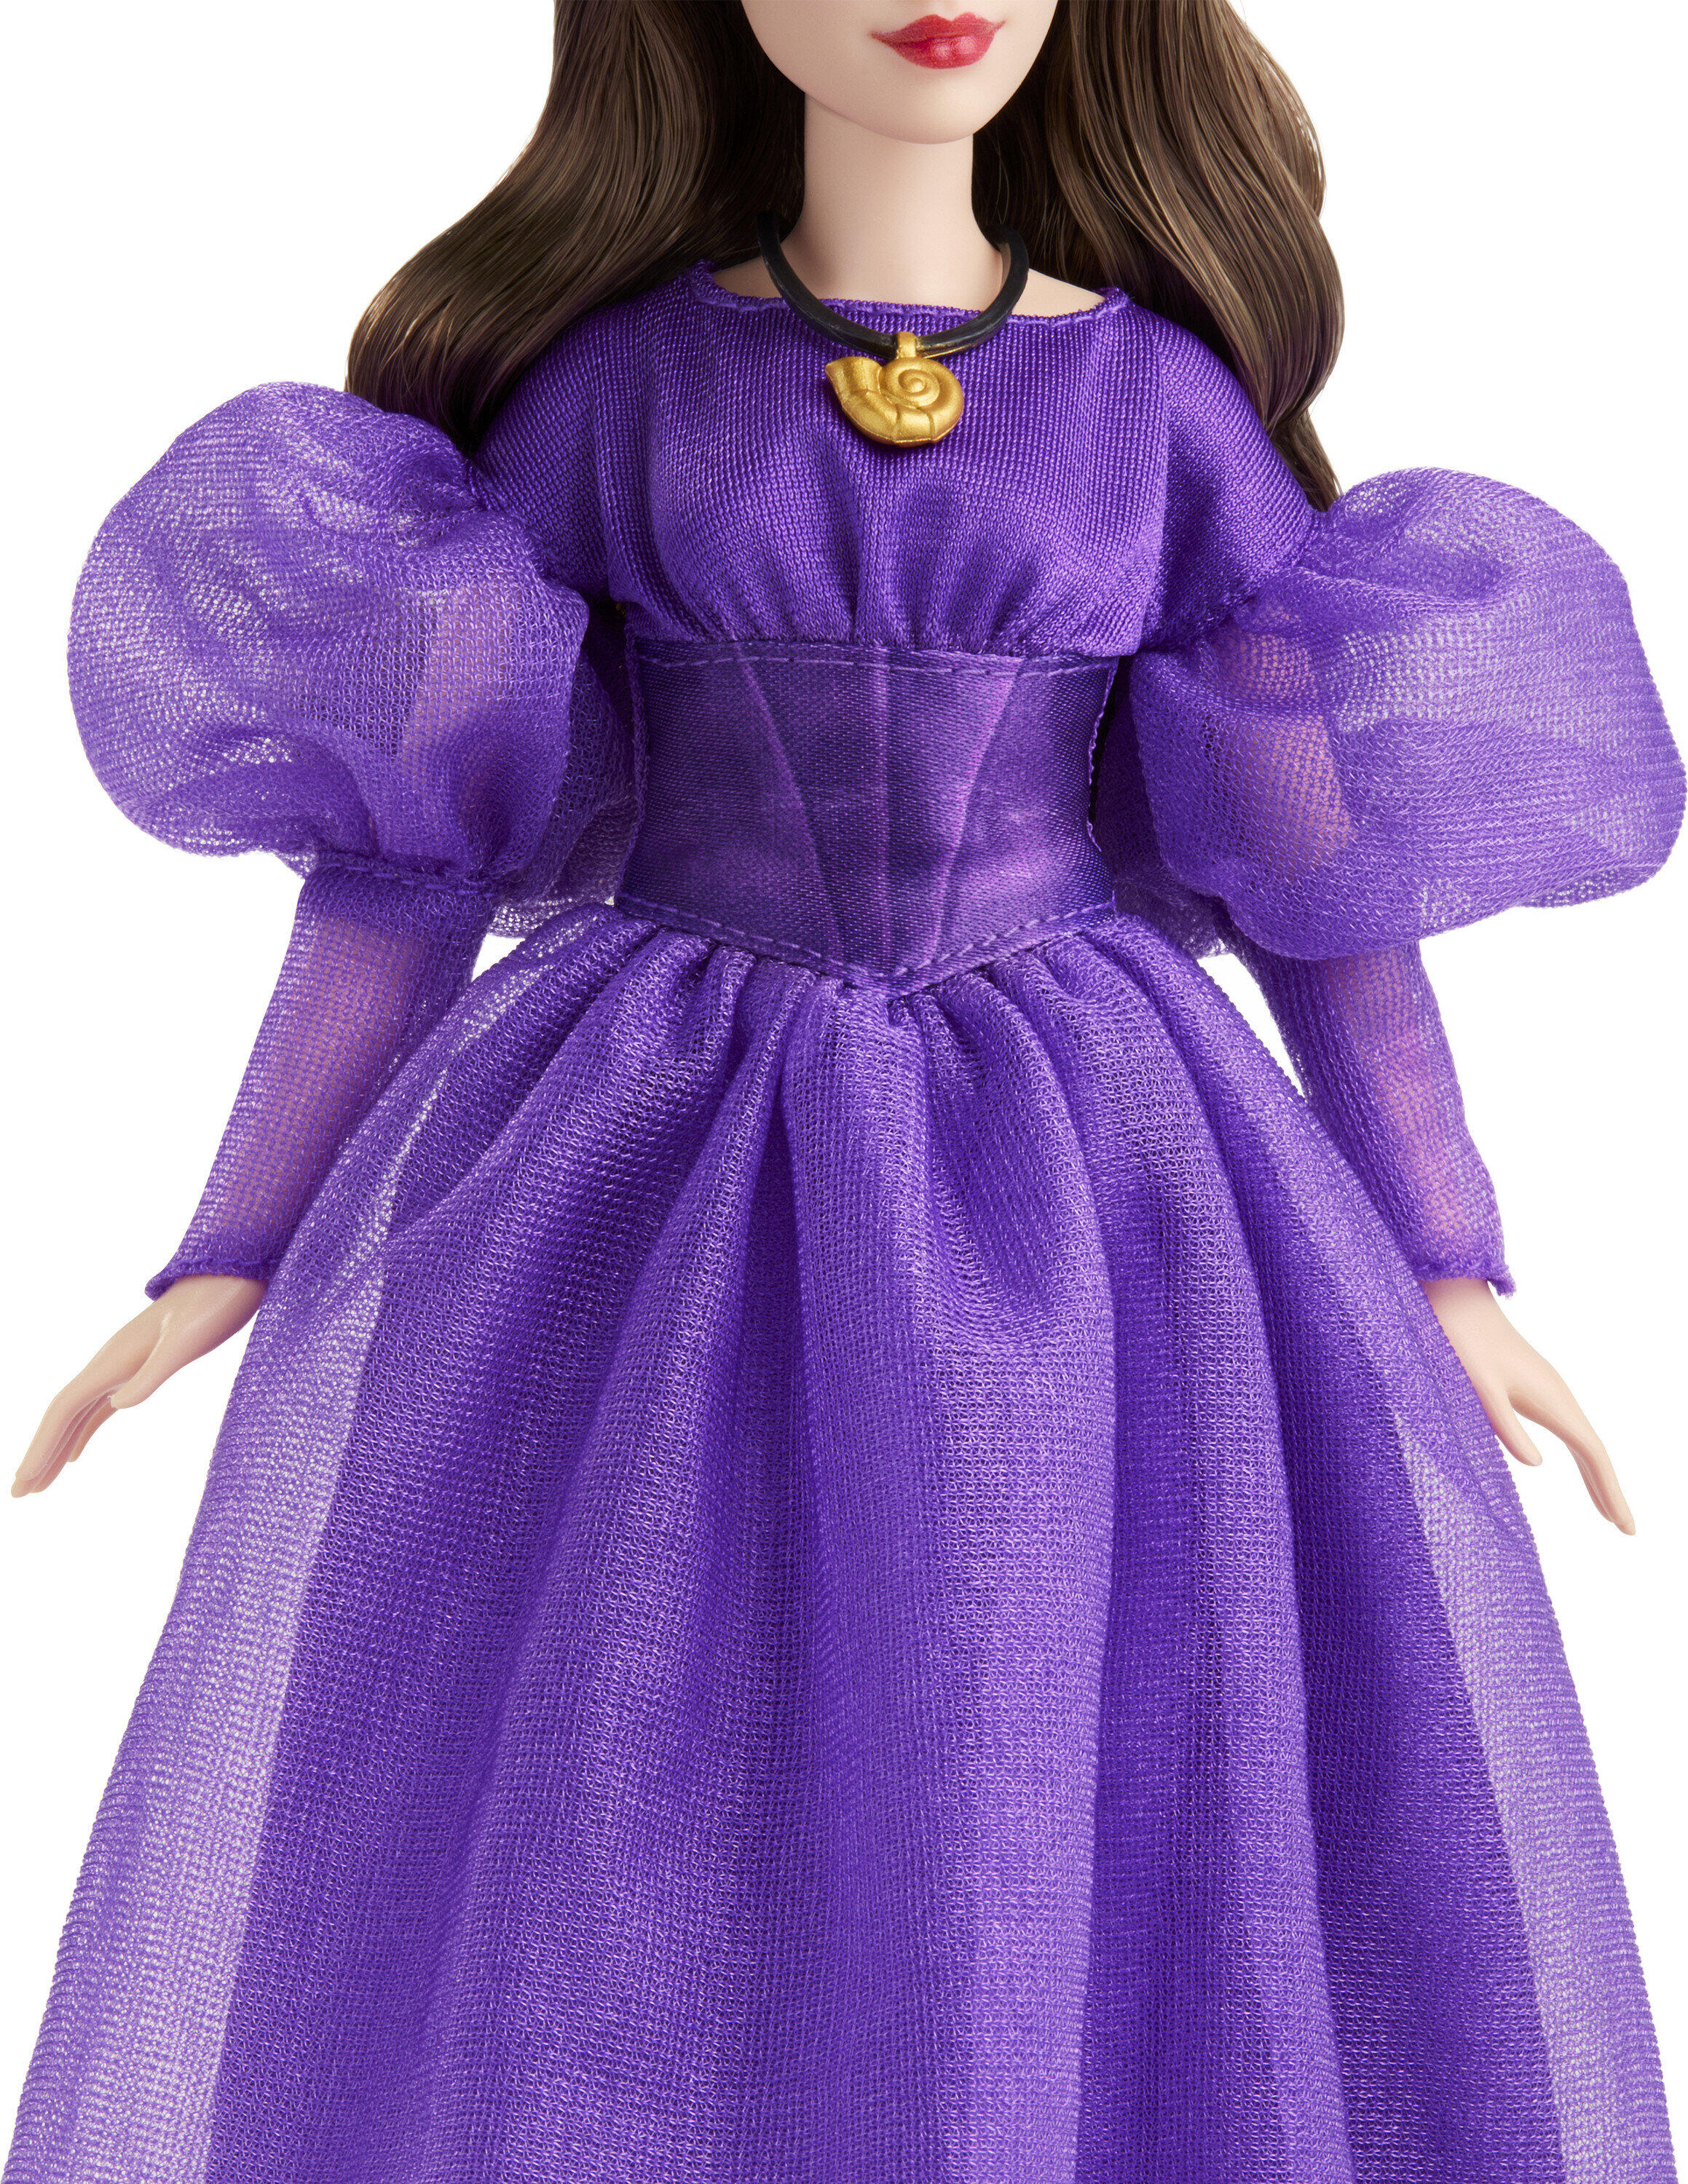 Disney The Little Mermaid Vanessa Fashion Doll in Signature Purple Dress - image 5 of 6